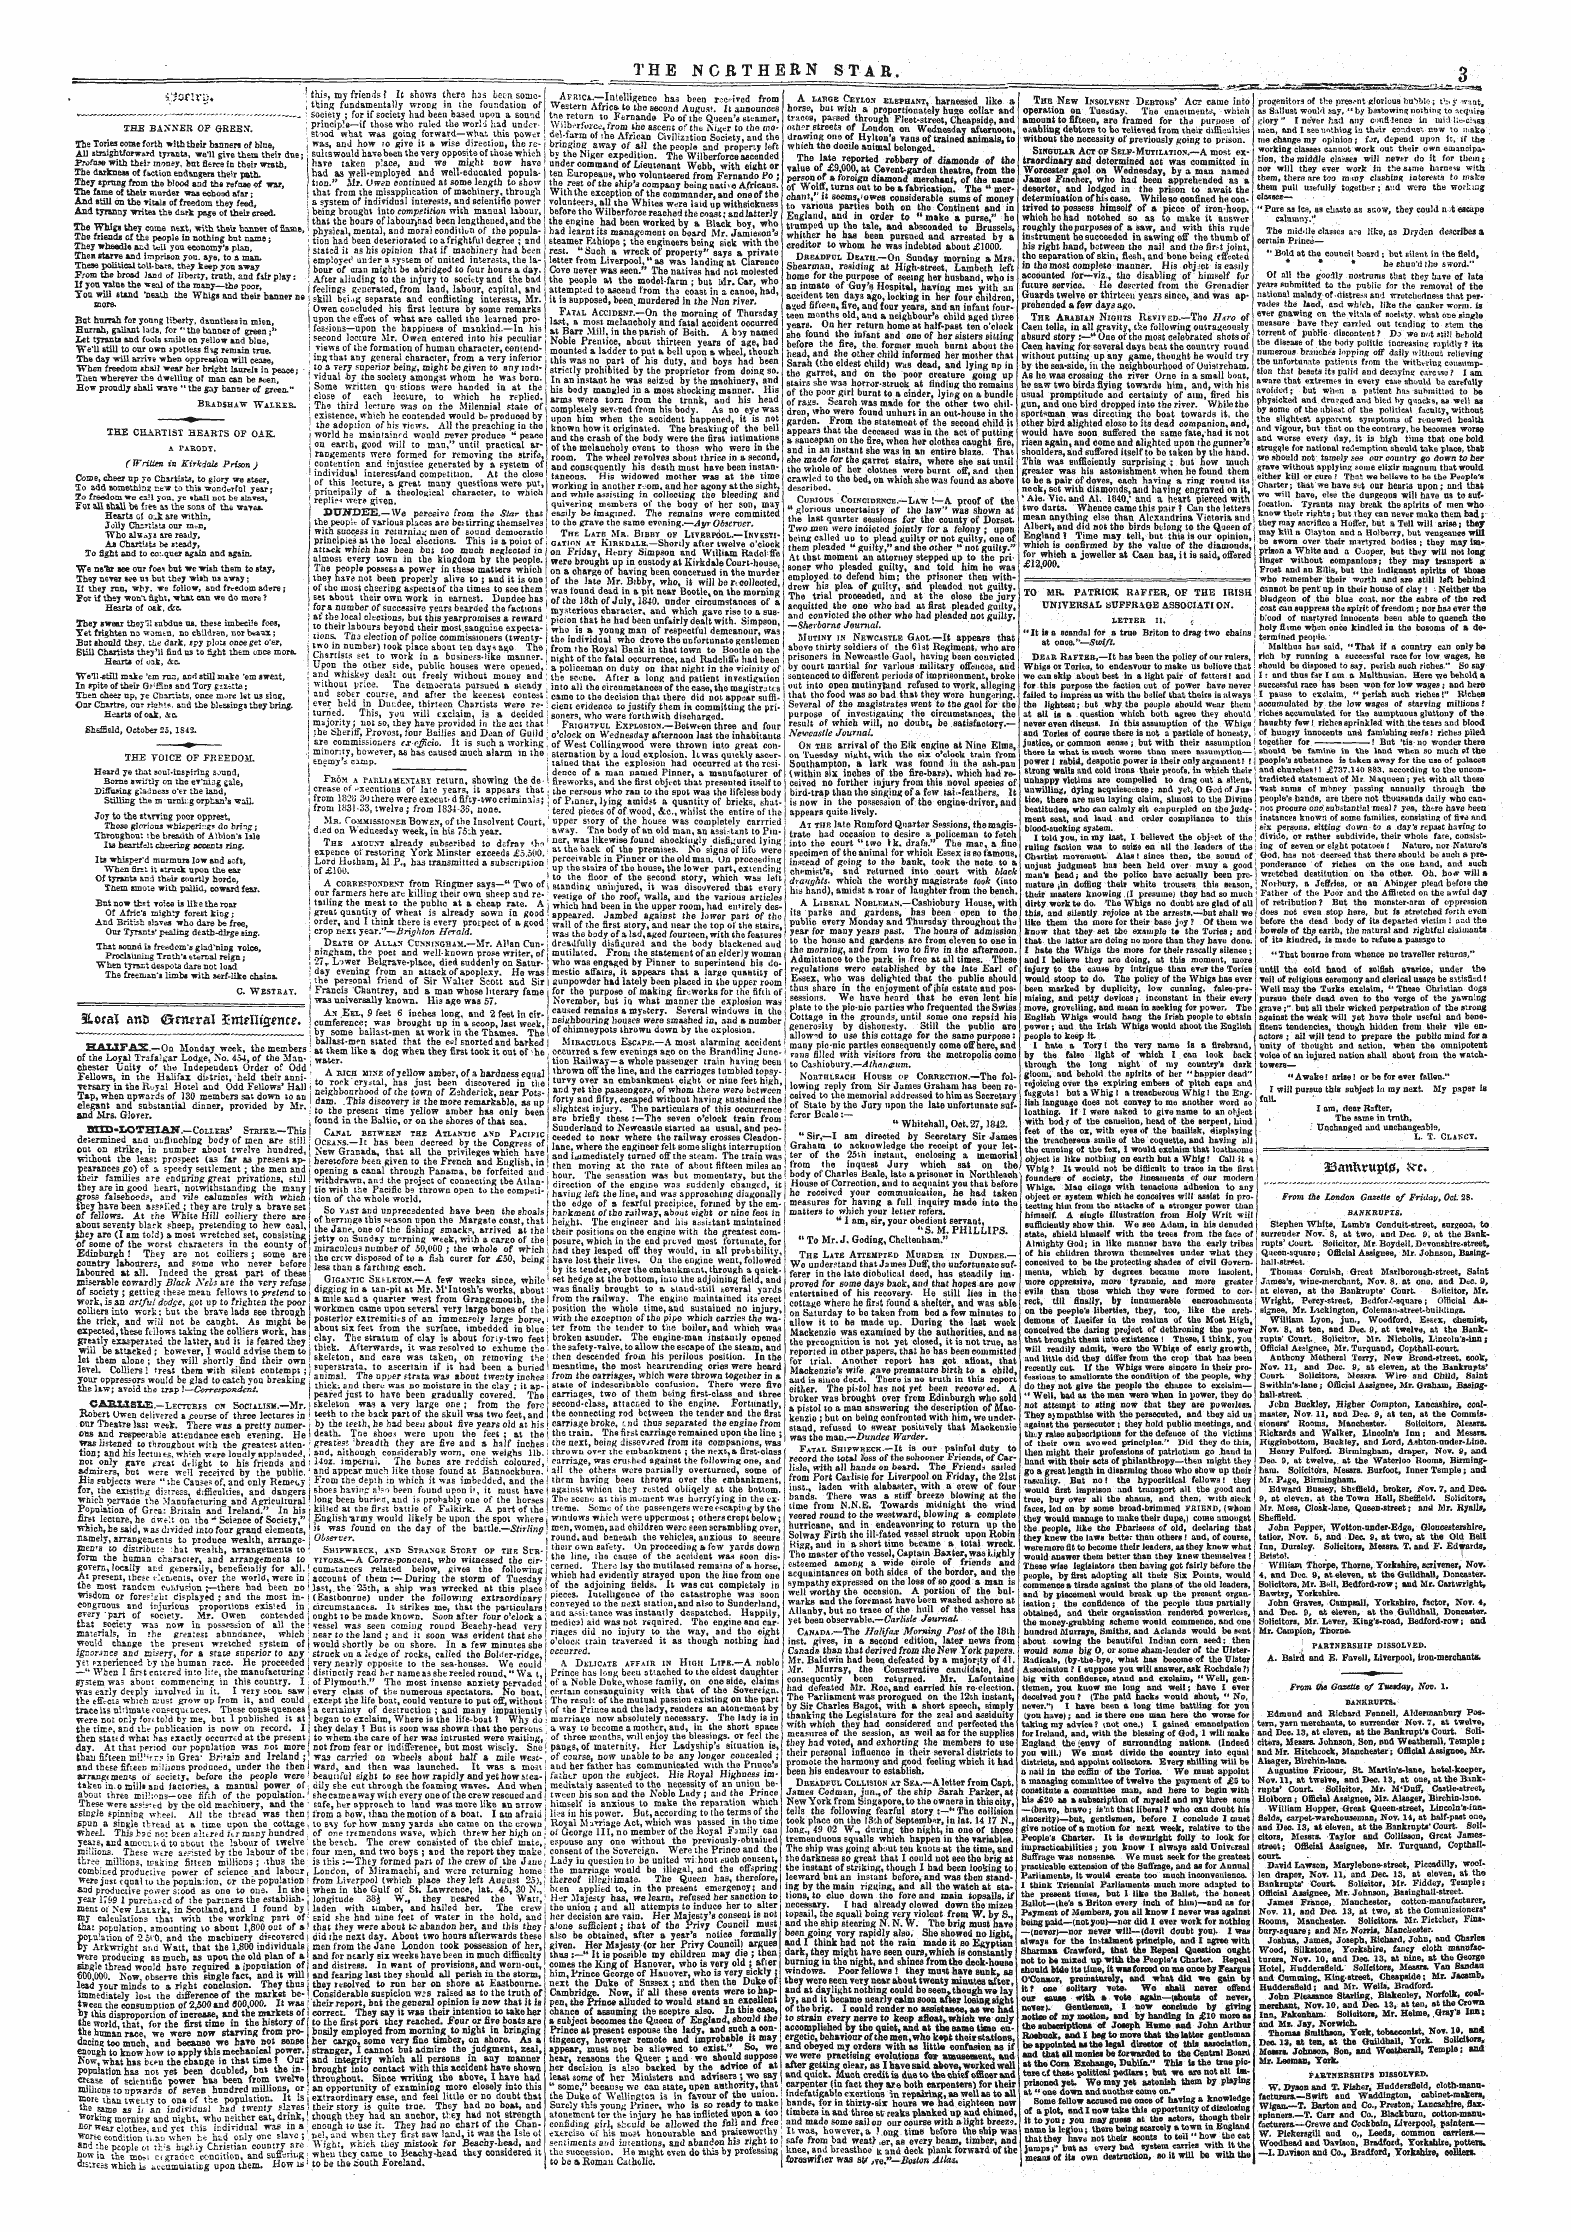 Northern Star (1837-1852): jS F Y, 5th edition - 3lorsx Ana (Ernural £Mrtlt2*Nc*